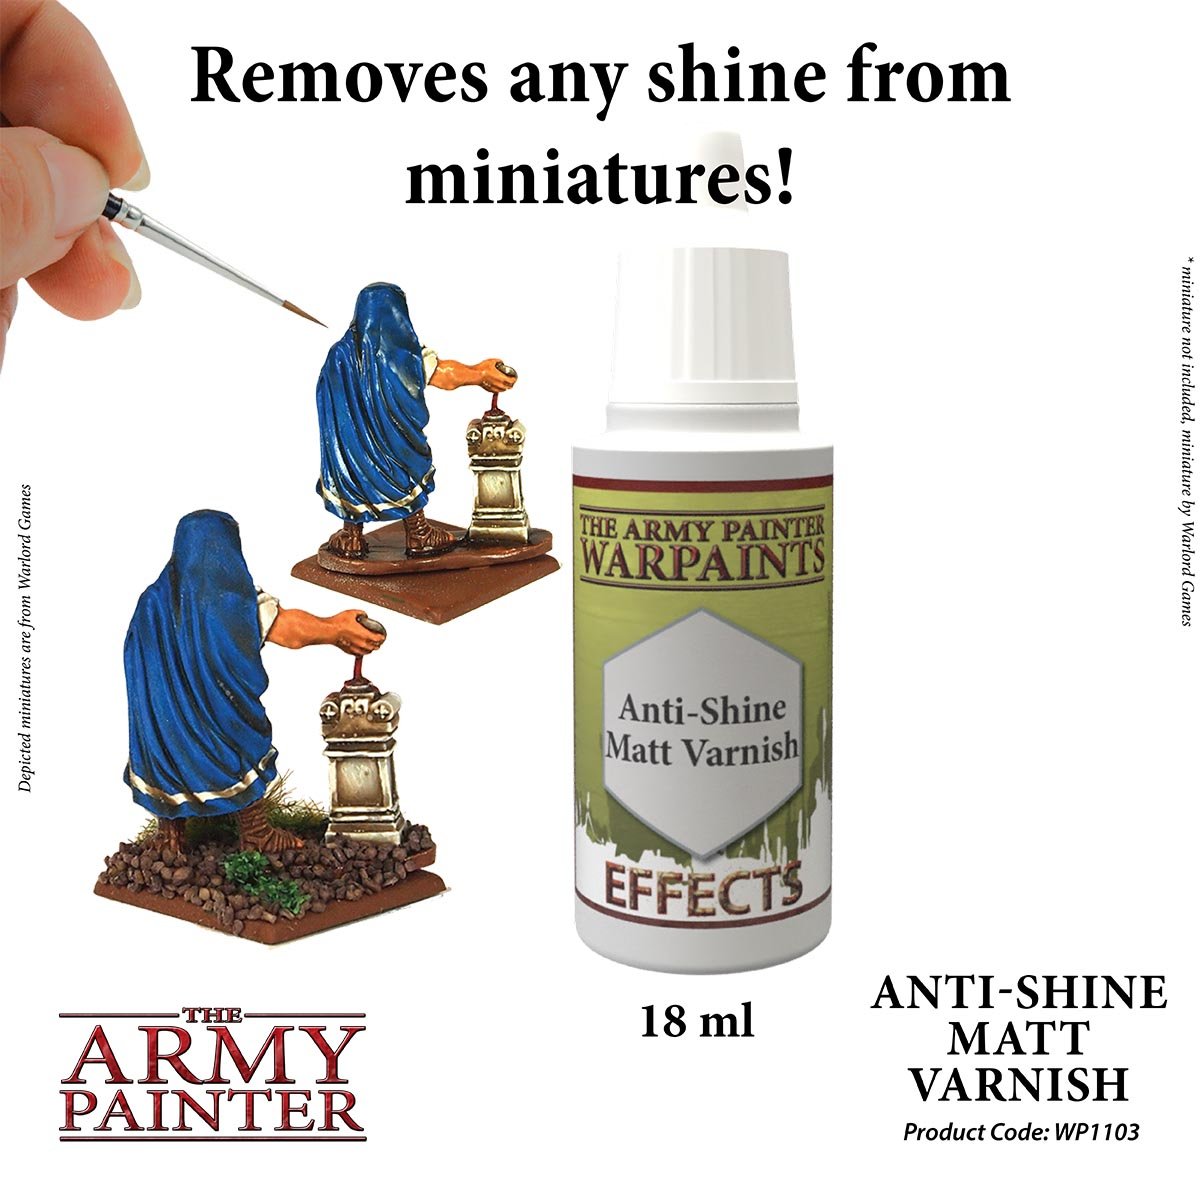 The Army Painter Warpaints WP1103 Anti-Shine Matt Varnish Acrylic Paint 18ml bottle